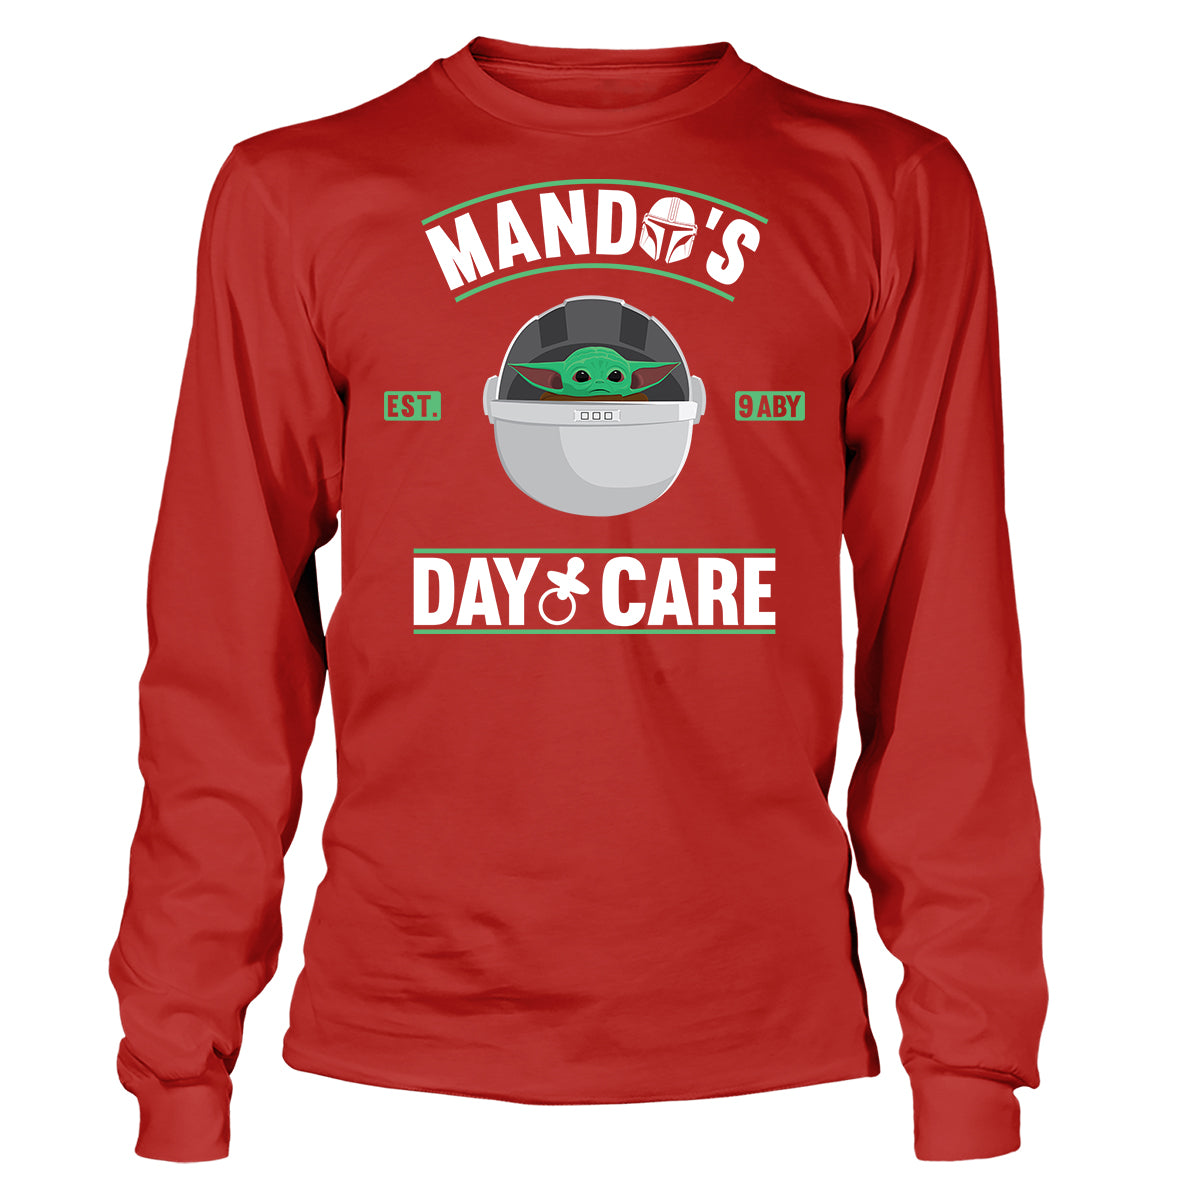 Mando's Day Care Long Sleeve T-Shirt